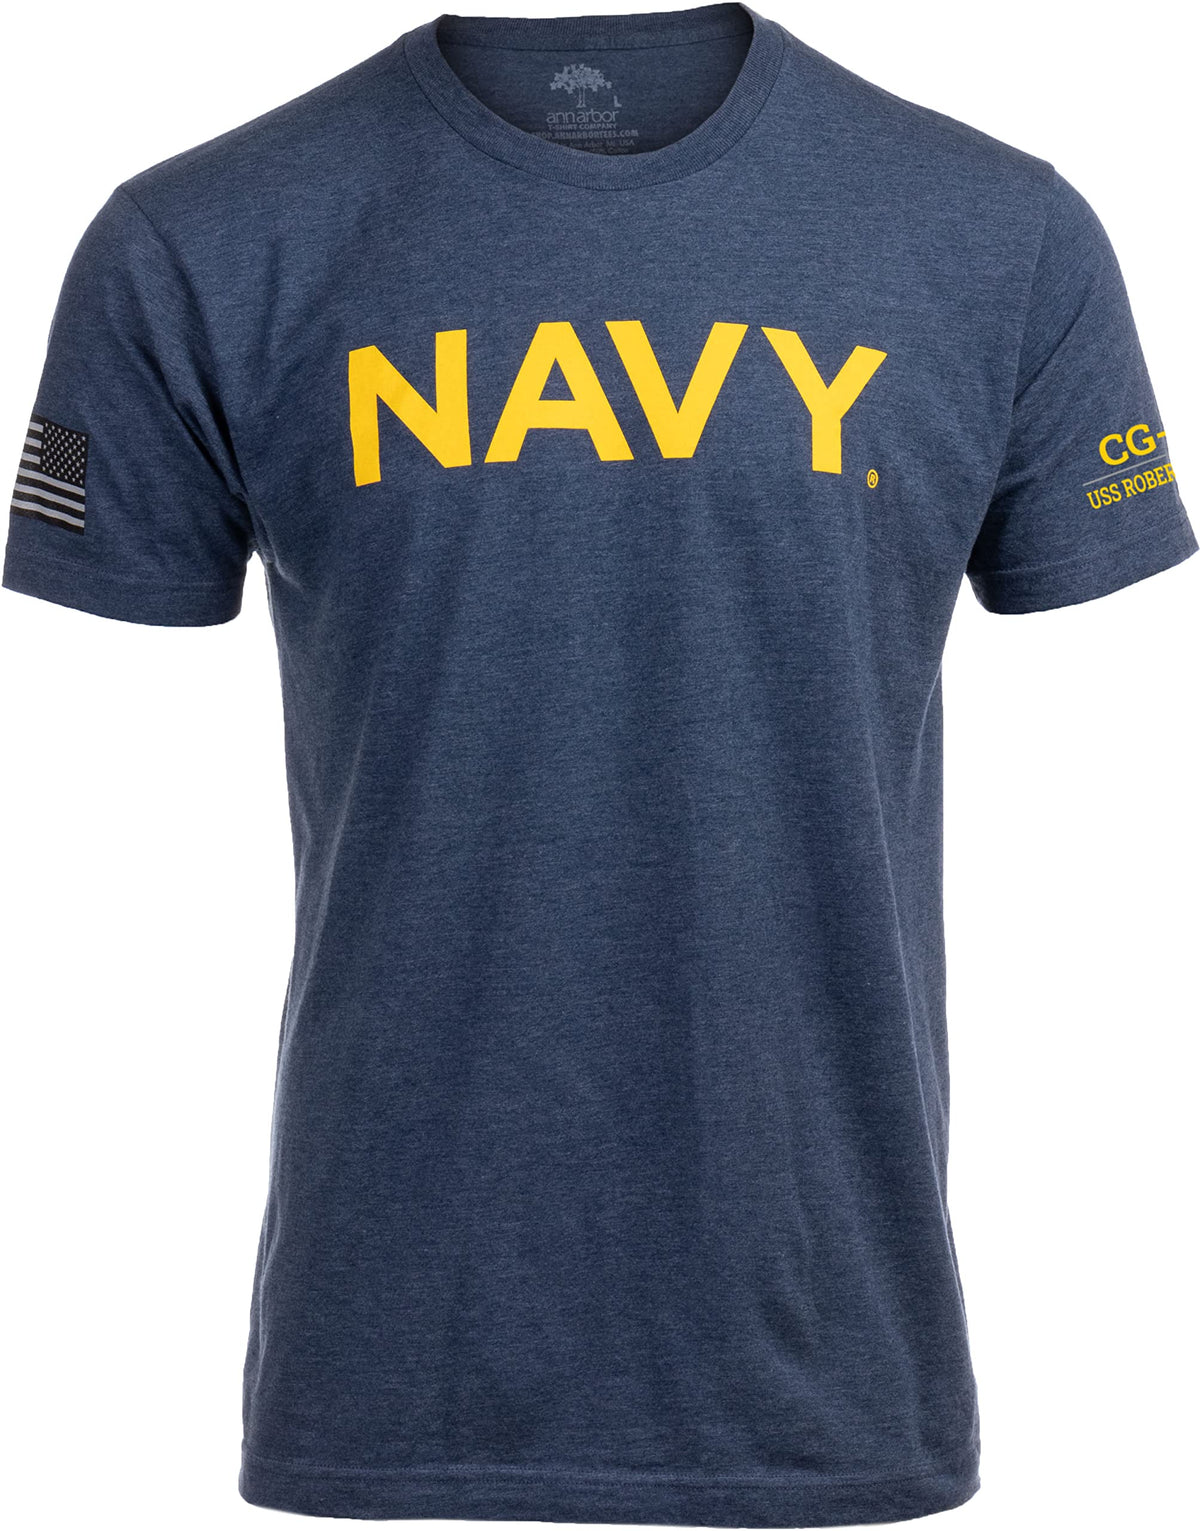 USS Robert Smalls, CG-62 | U.S. Navy Sailor Veteran USN United States Naval T-shirt for Men Women